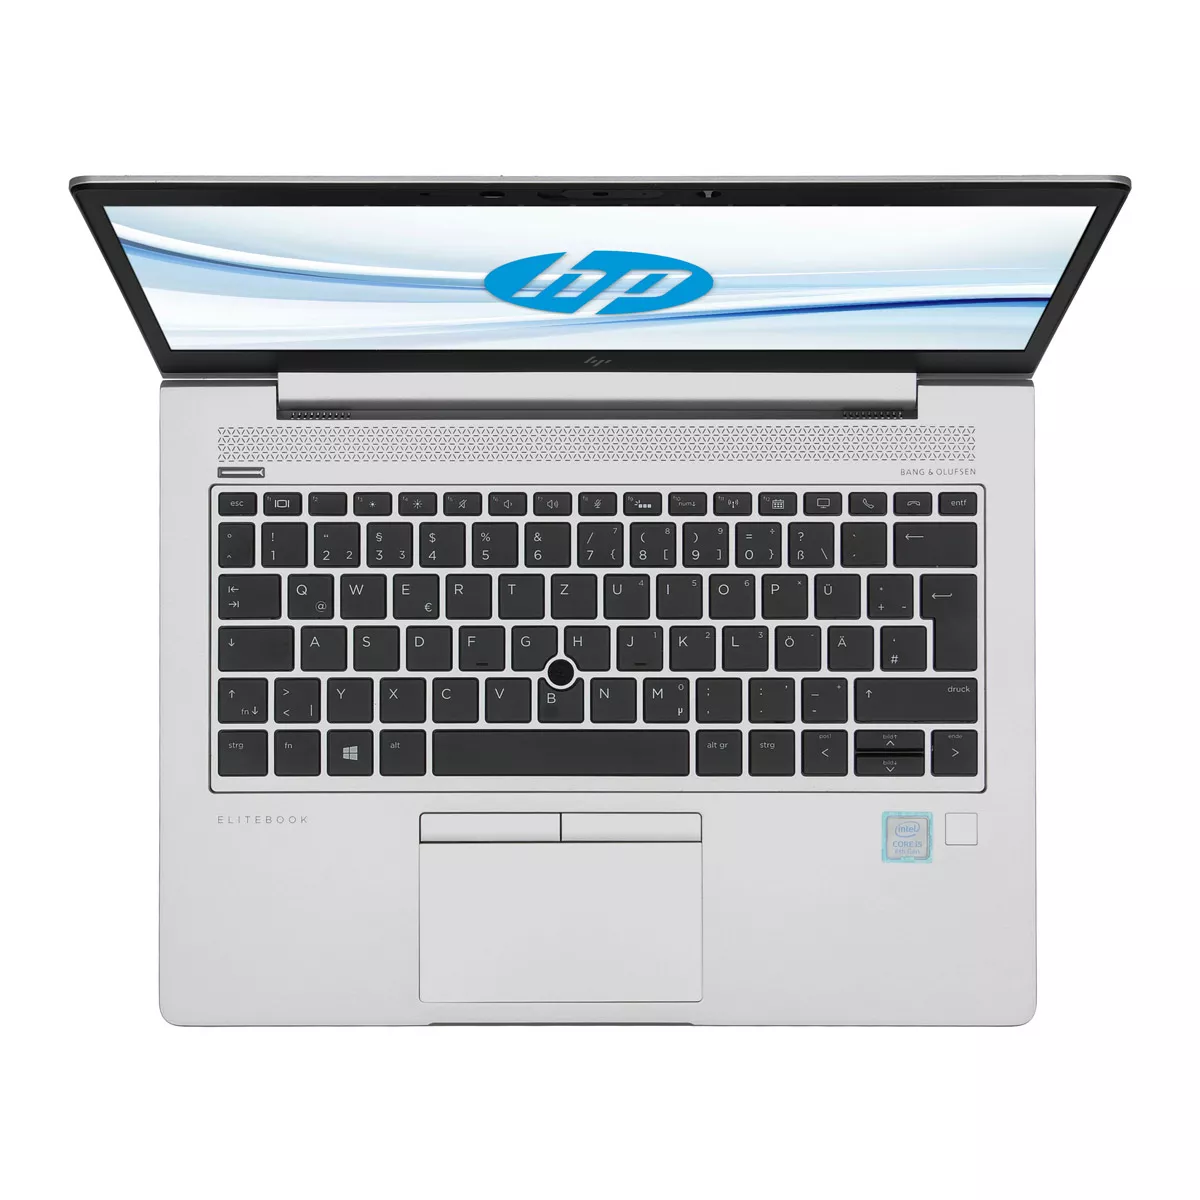 HP EliteBook 830 G6 Core i5 8265U Full-HD 240 GB M.2 nVME SSD Webcam B